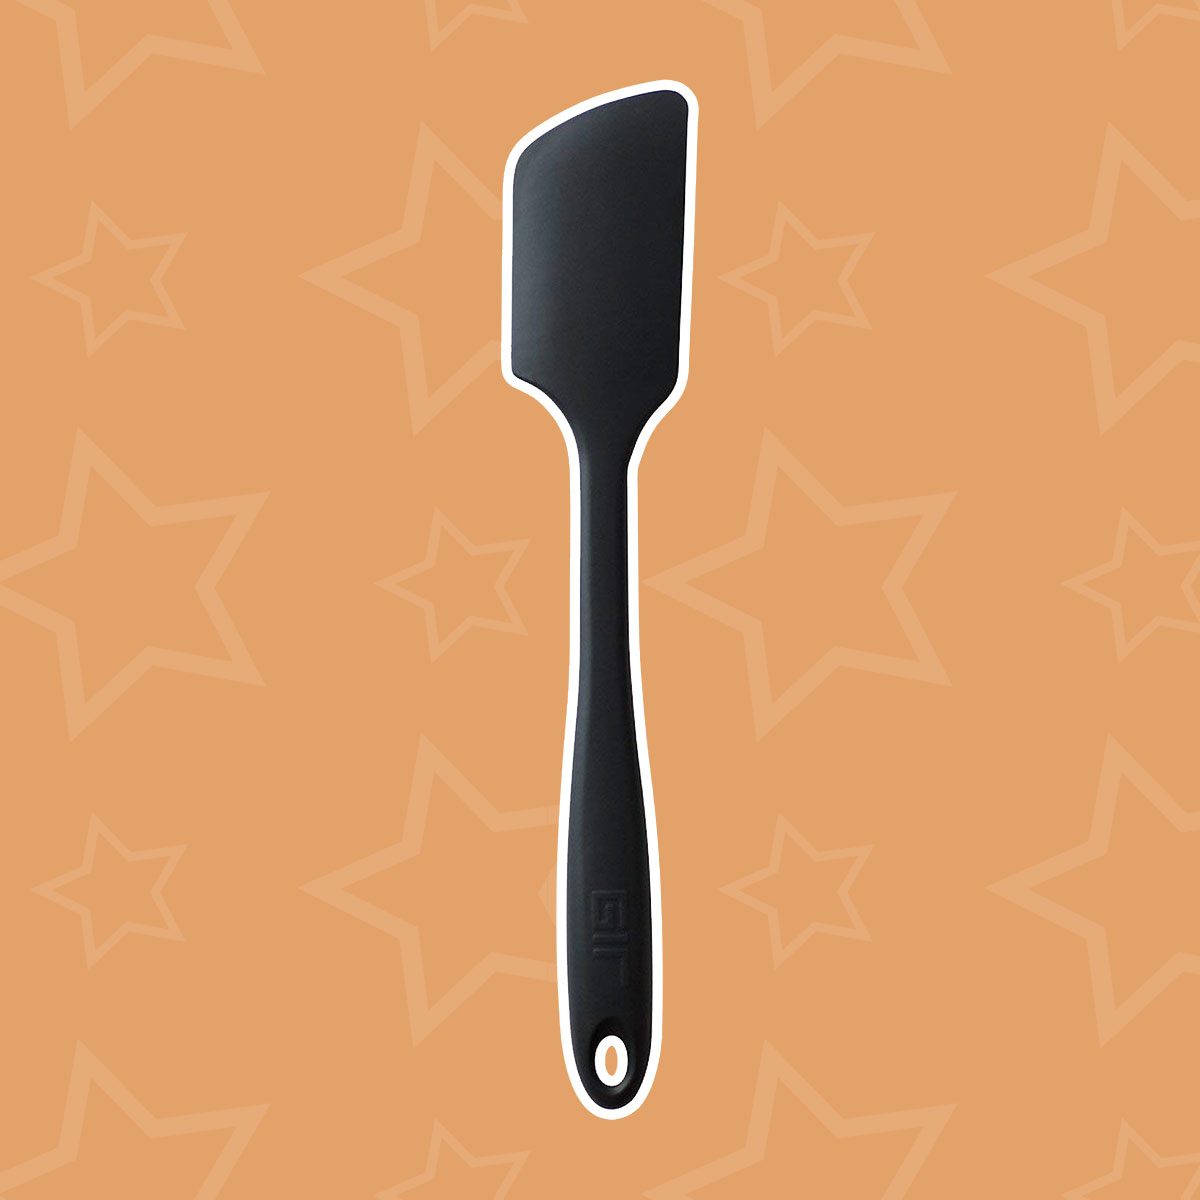 https://www.tasteofhome.com/wp-content/uploads/2018/11/ultimate-spatula.jpg?fit=700%2C700